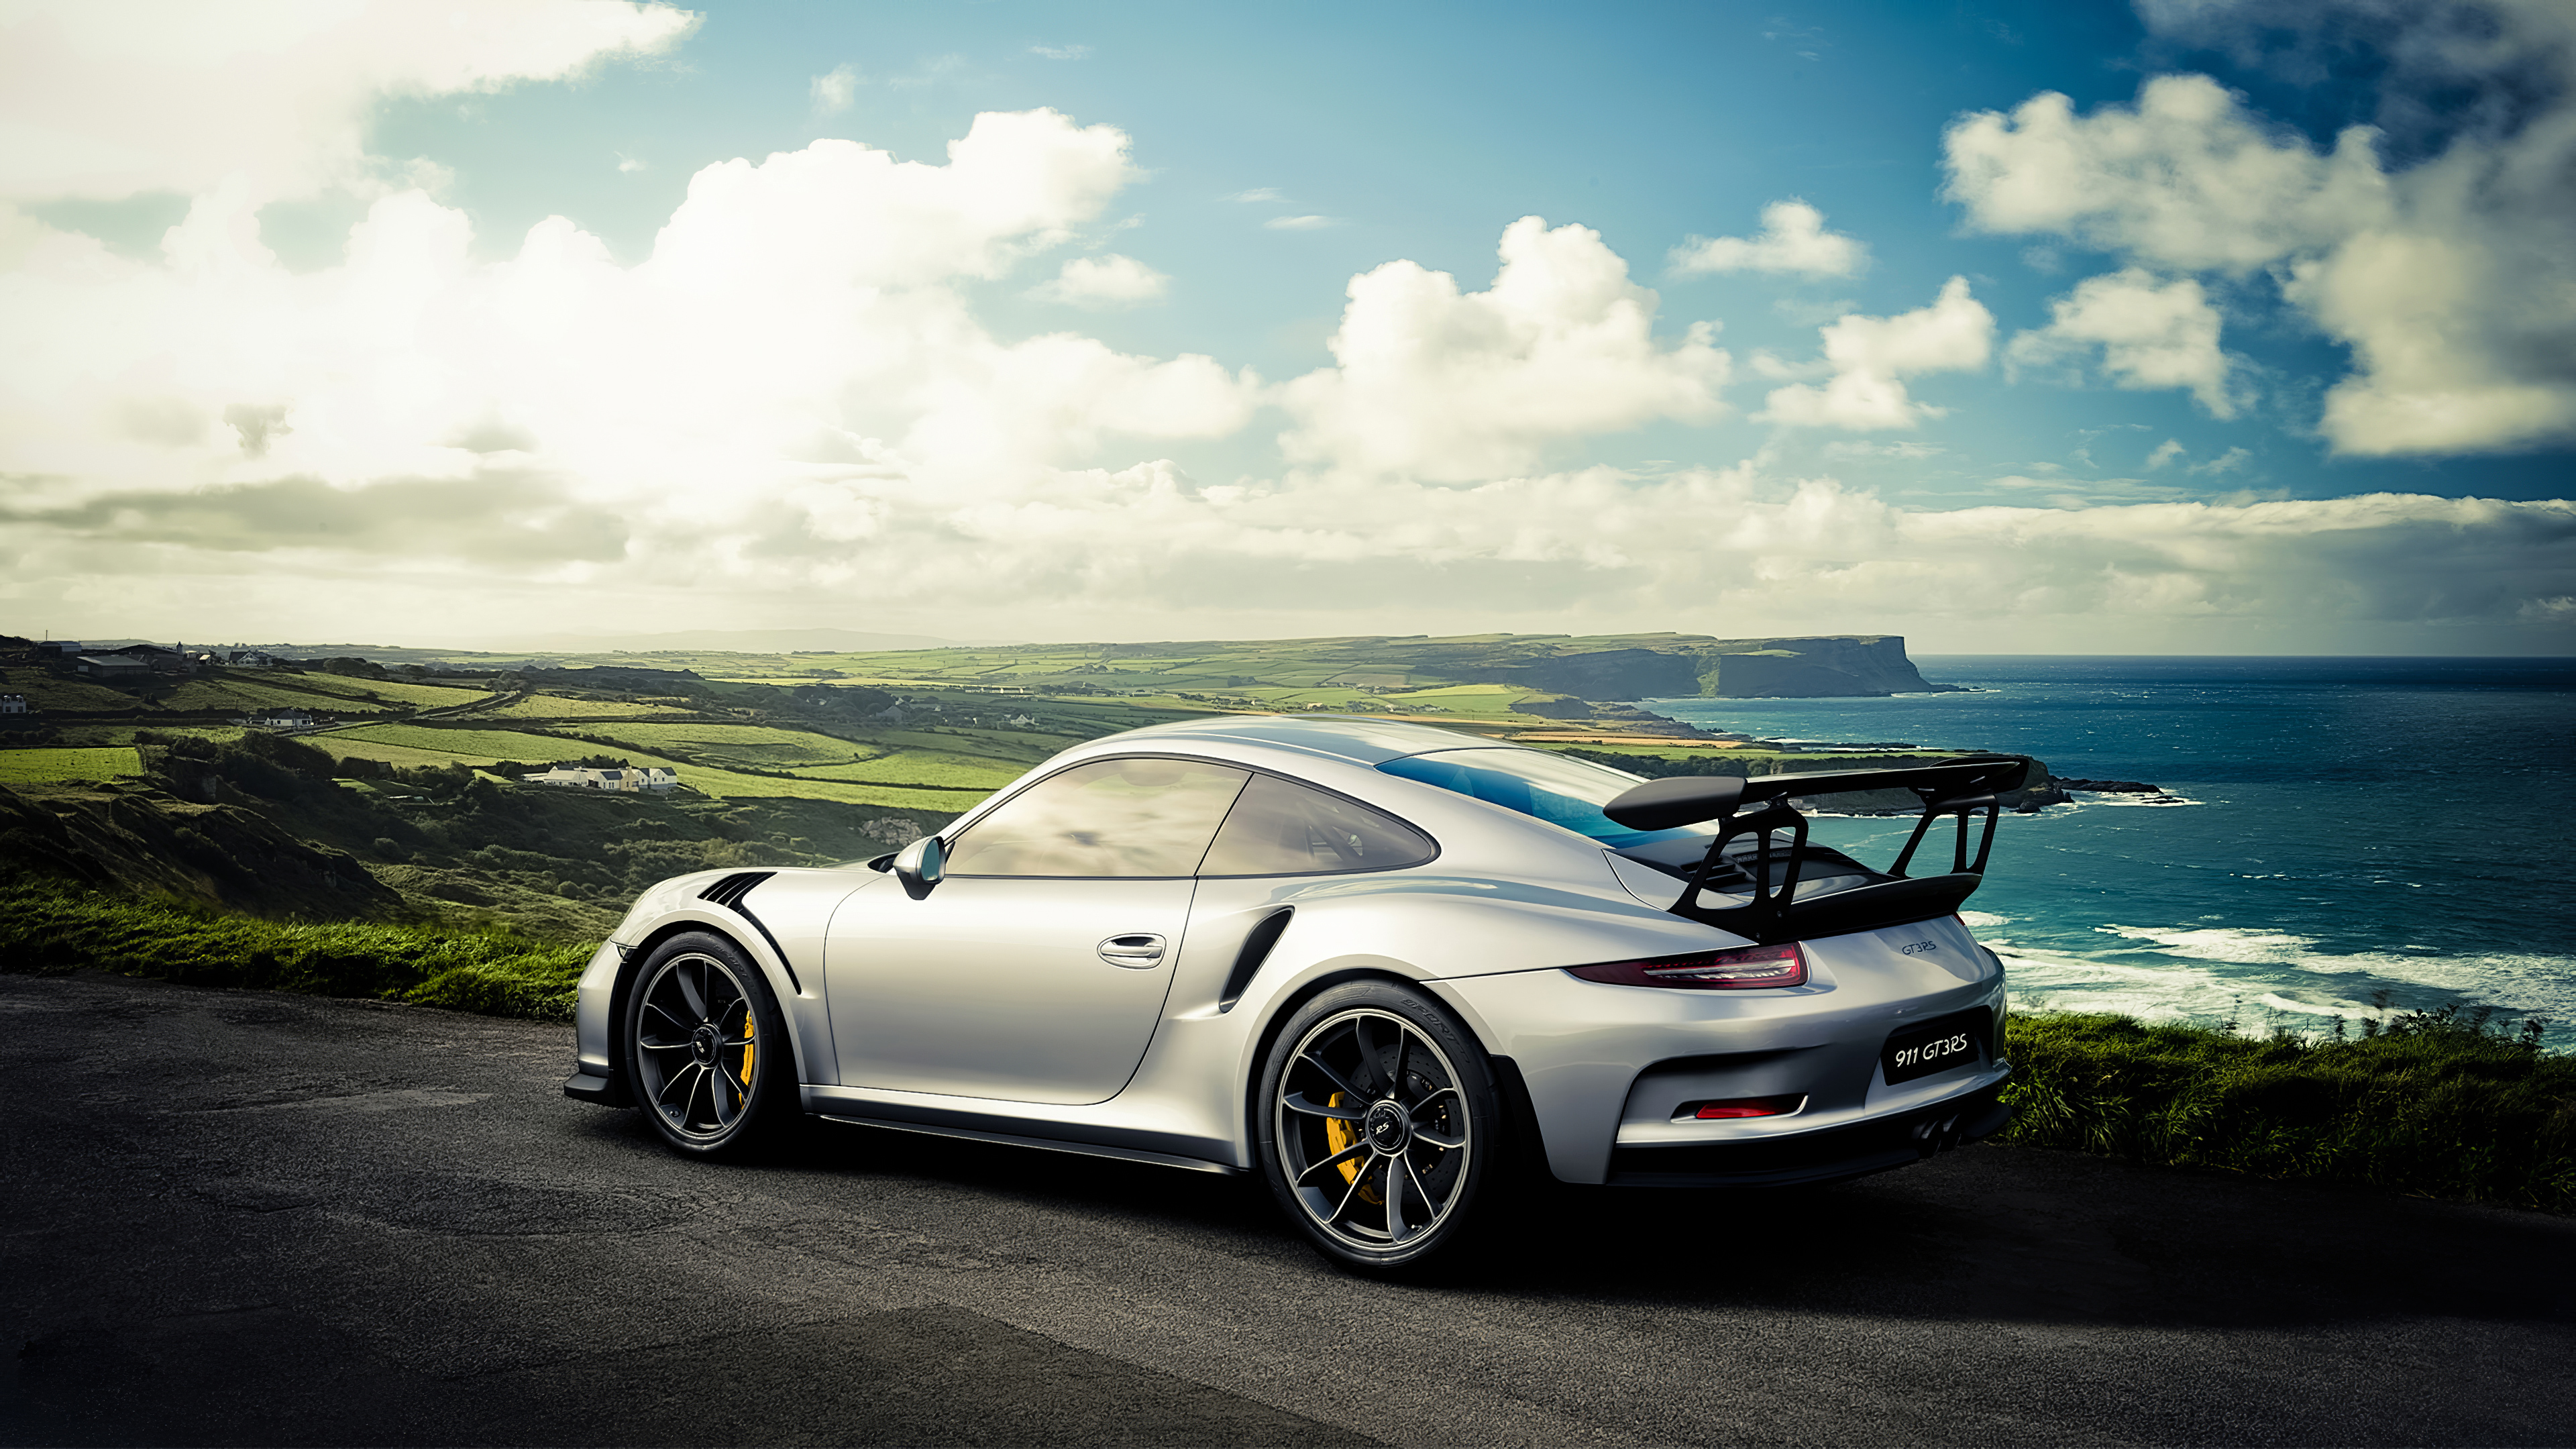 Porsche 911 Gt3 Rs 2019 4k, HD Cars, 4k Wallpapers, Images, Backgrounds